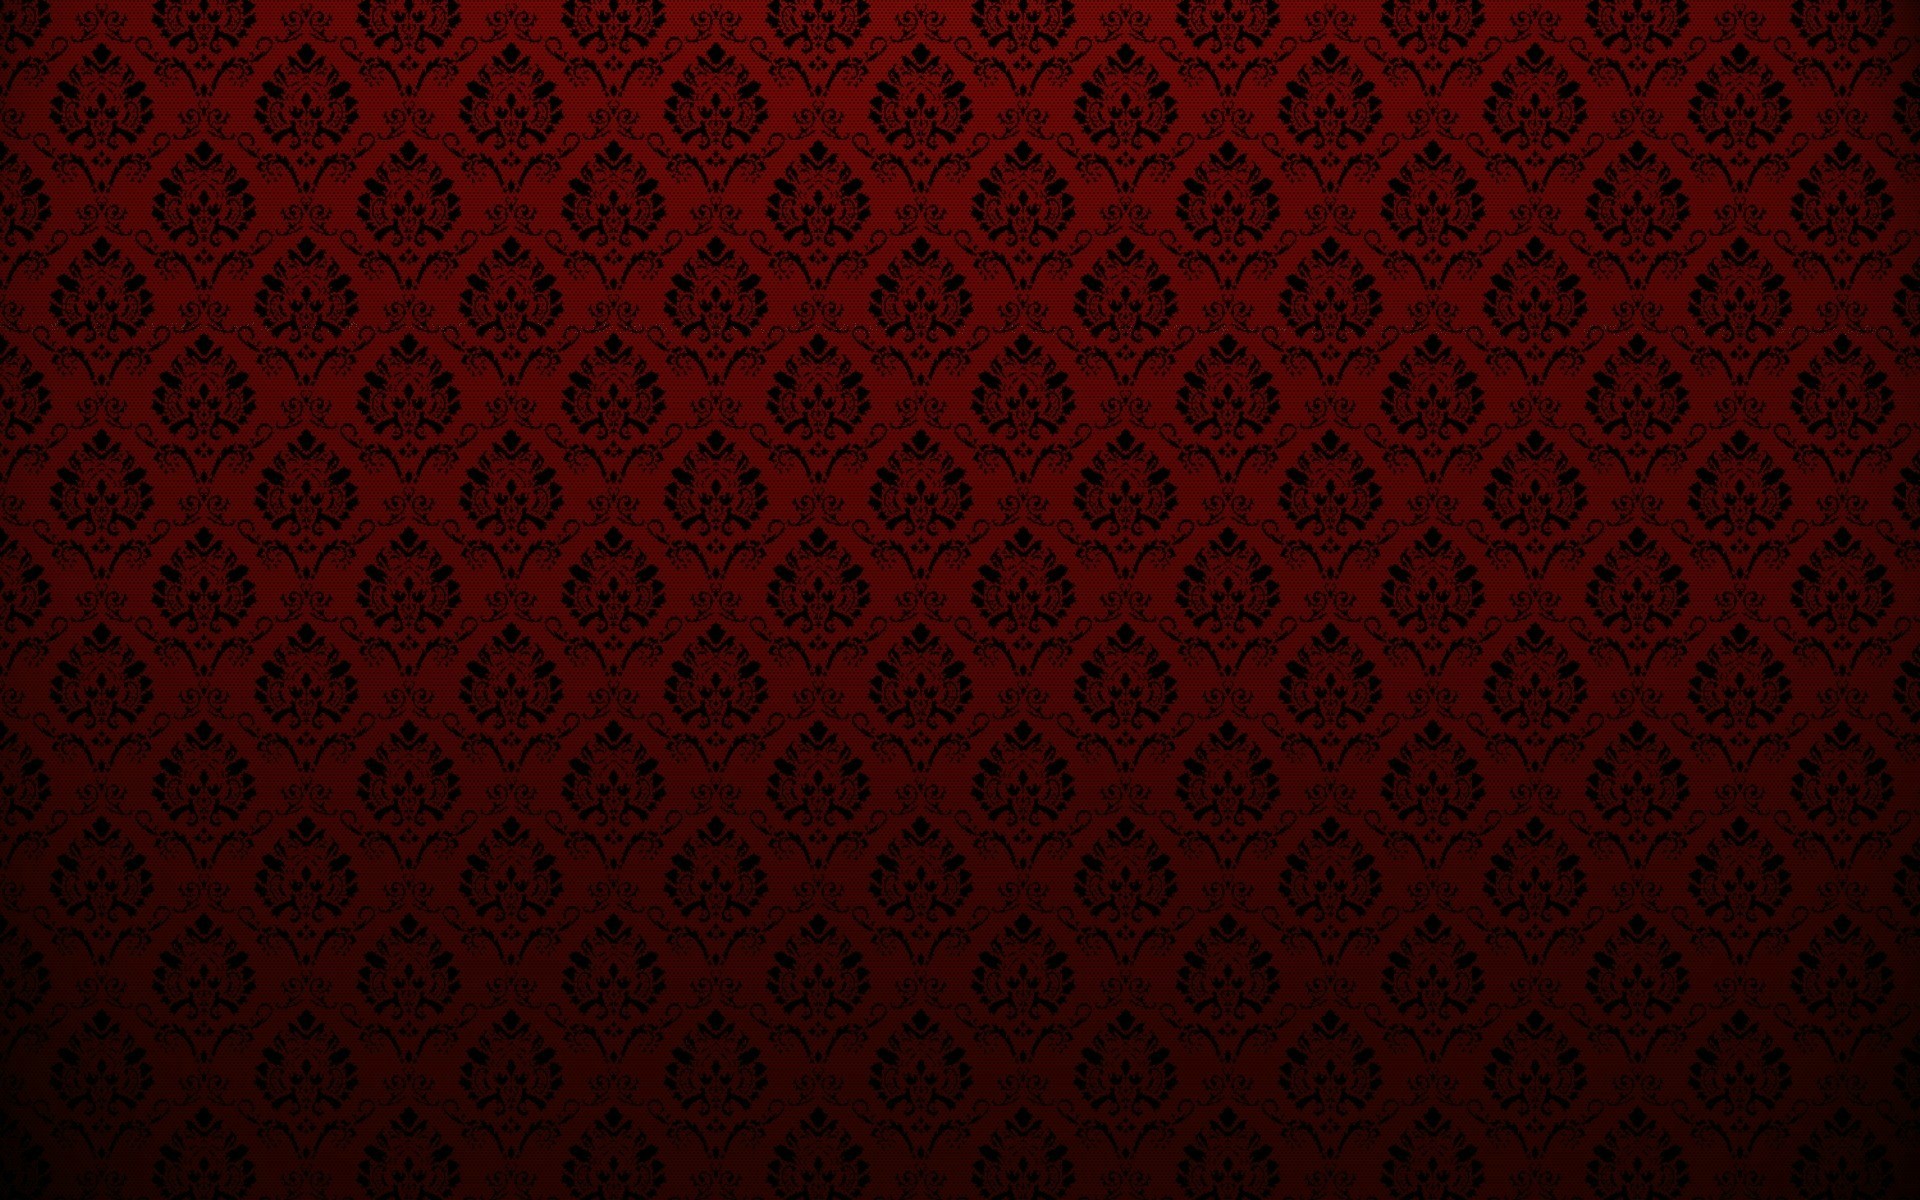 Red Classy Wallpaper 5839 1920x1200 px ~ WallpaperFort.com